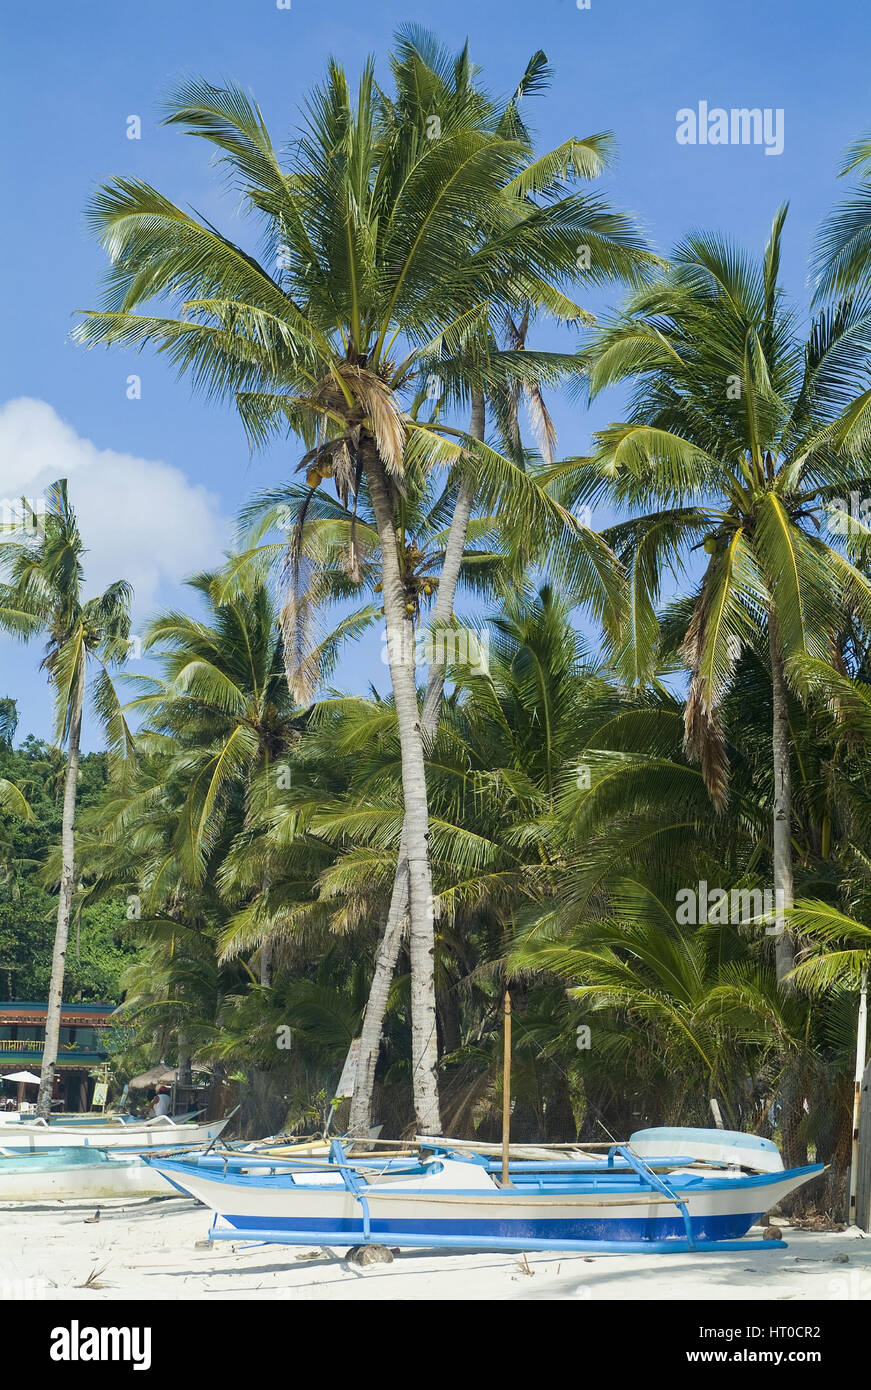 Palmenstrand, Boracay, Philippinen - palm beach Banque D'Images